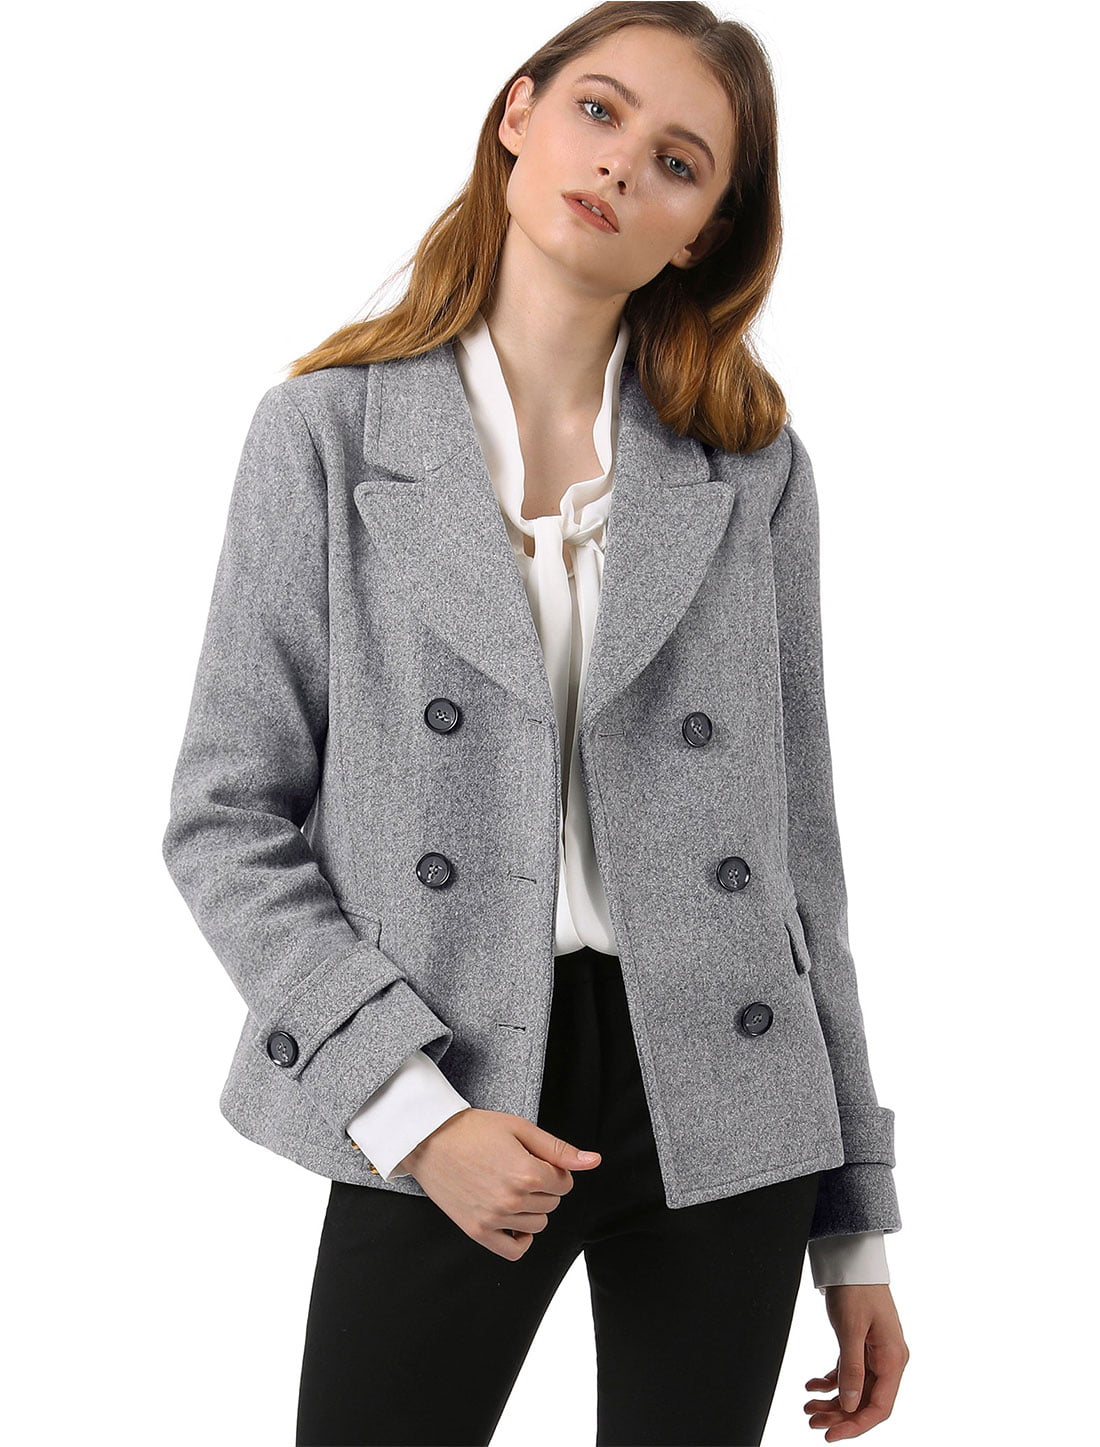 Unique Bargains Women's Double Breasted Pea Coat (Size M / 10) Grey